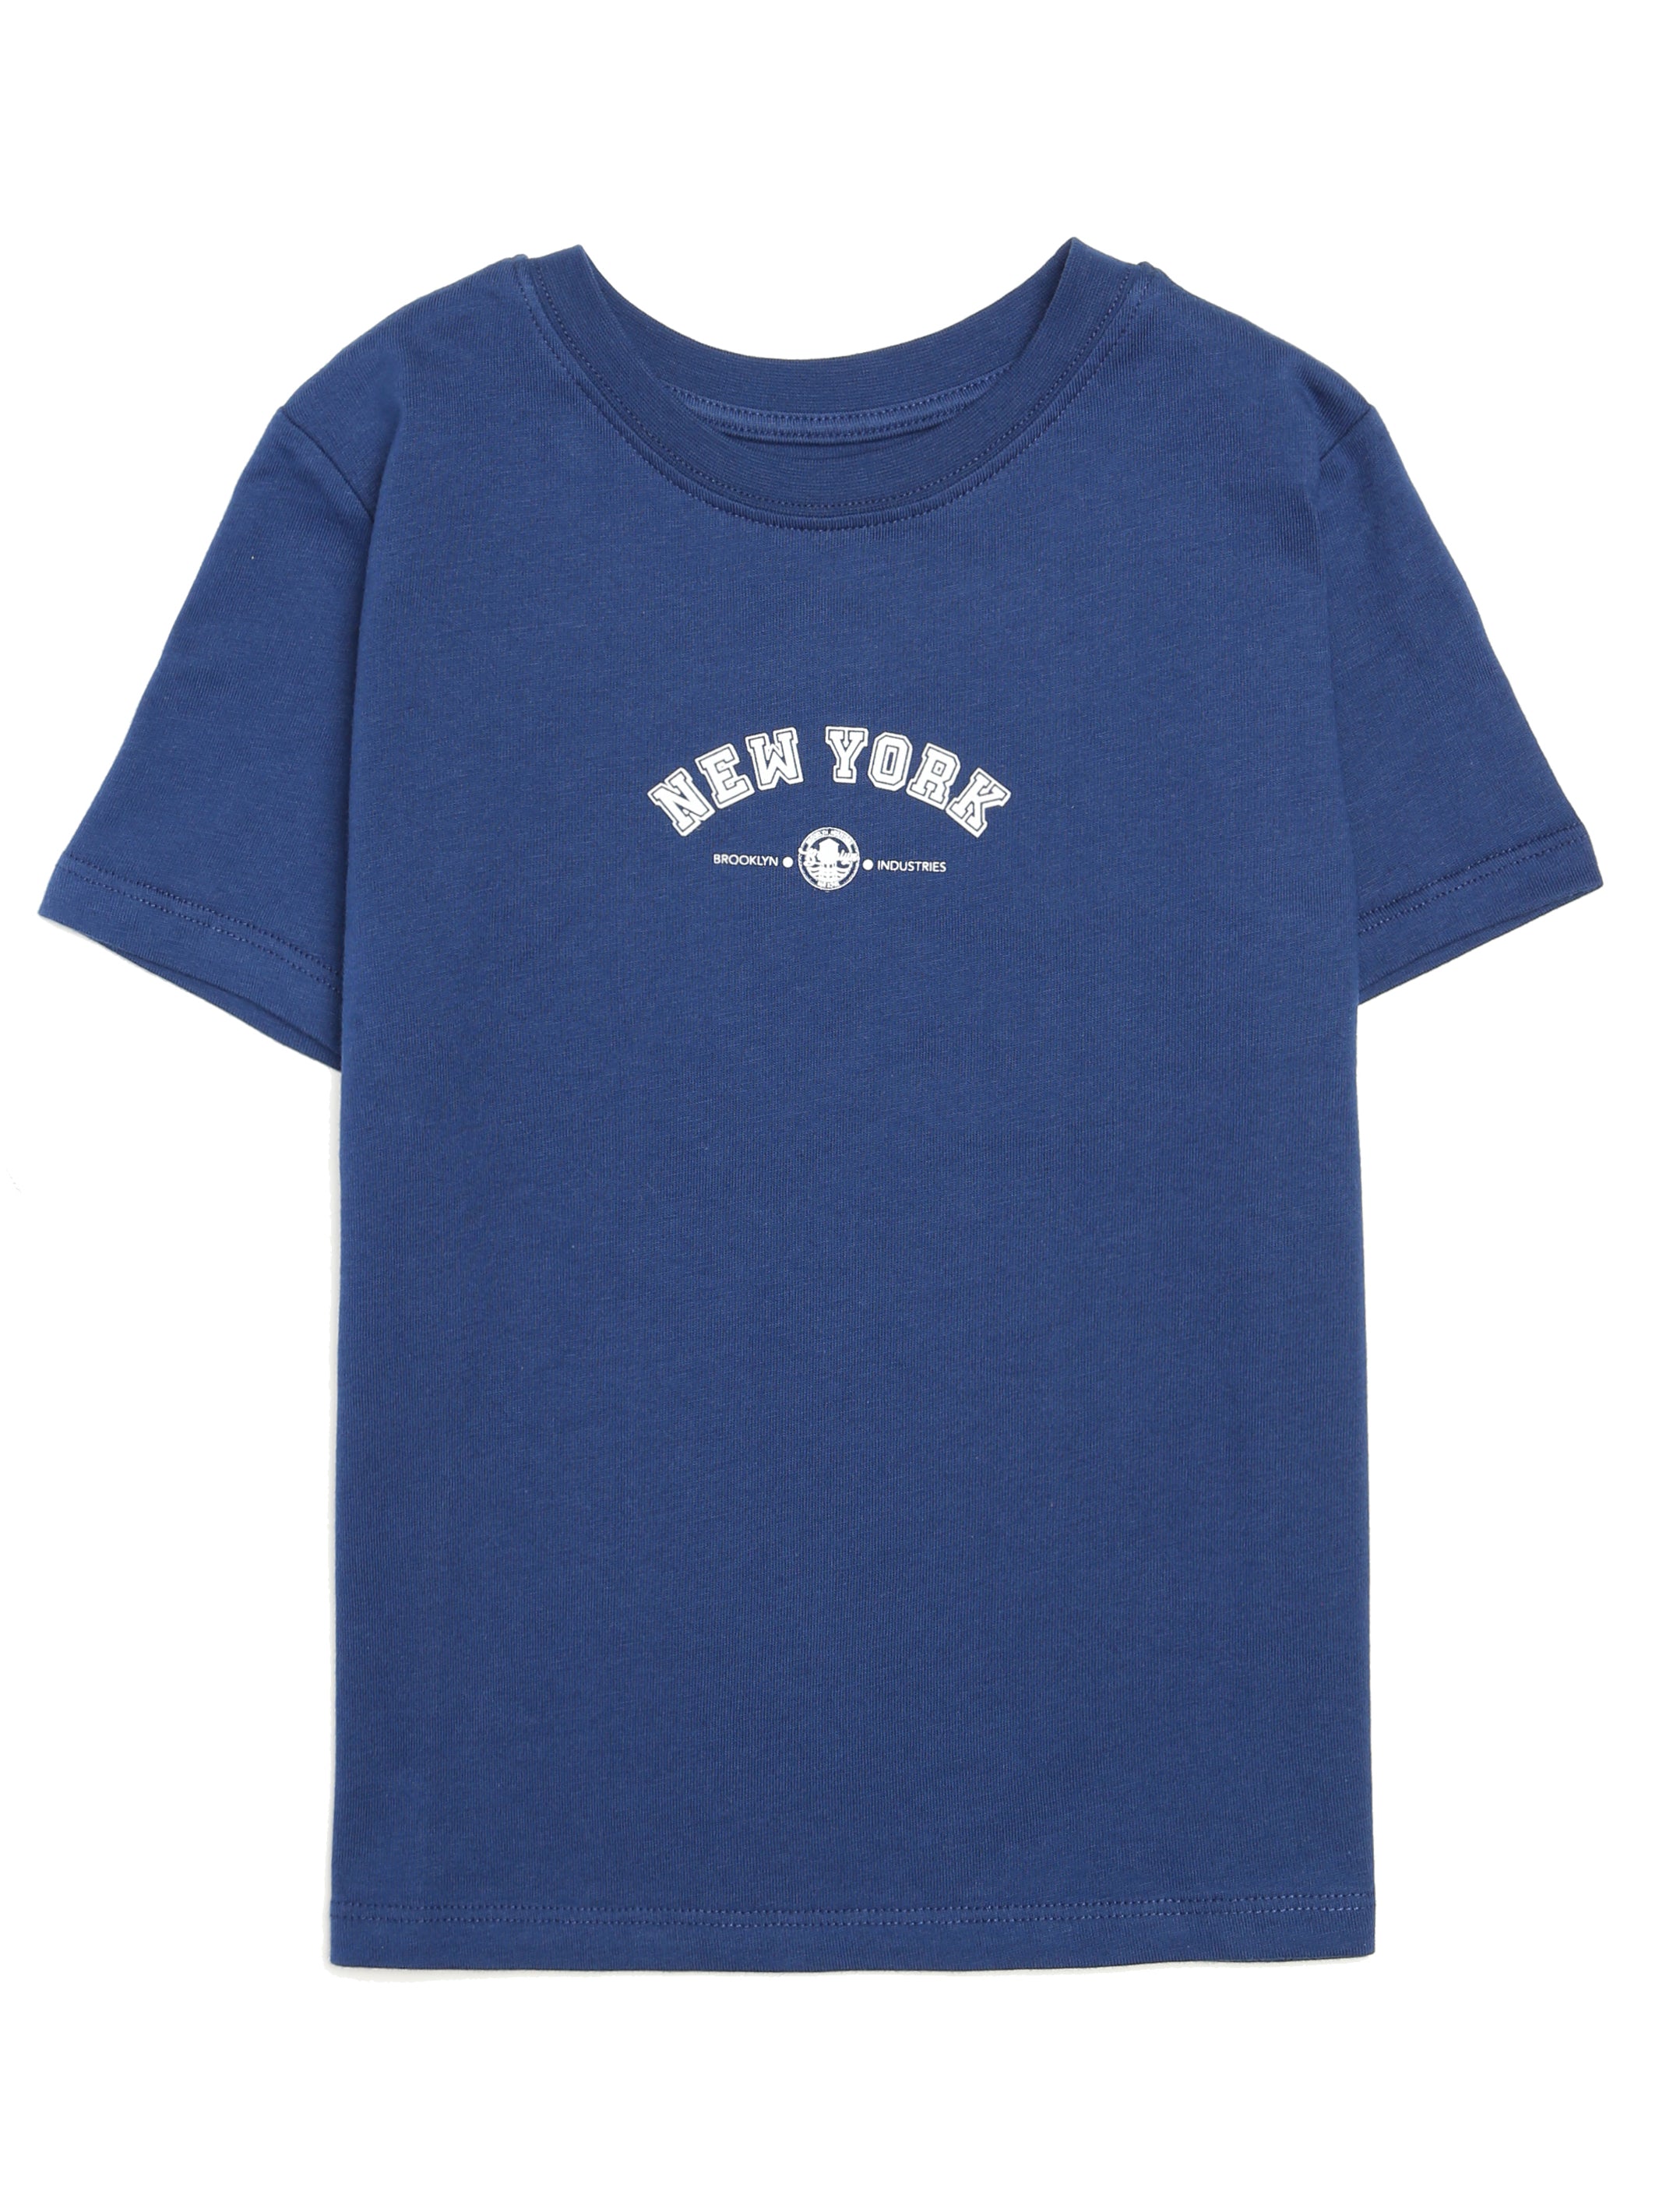 Girl's New York T-shirt in Navy Peony - BROOKLYN INDUSTRIES